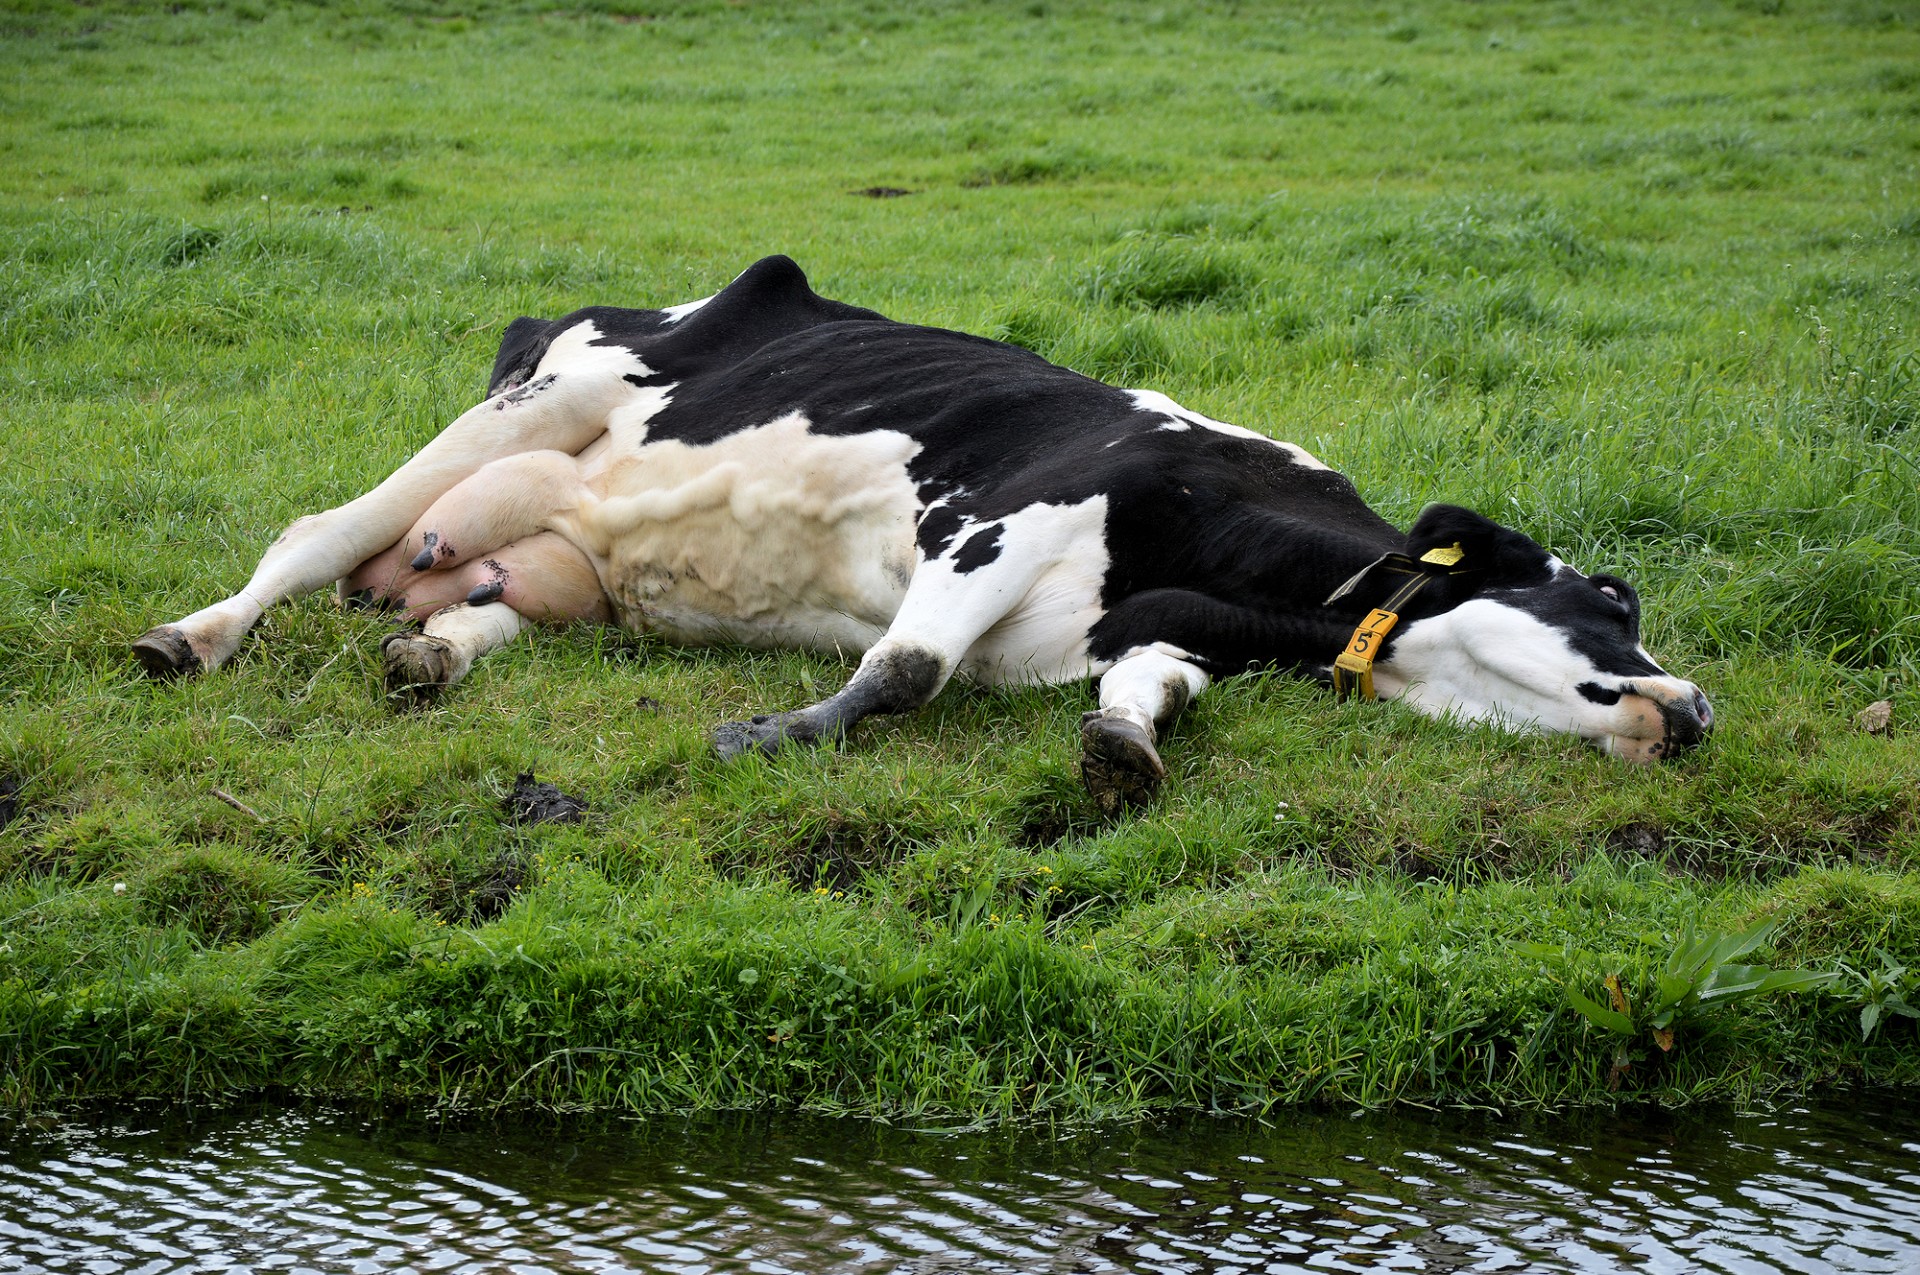 a-sleeping-cow.jpg